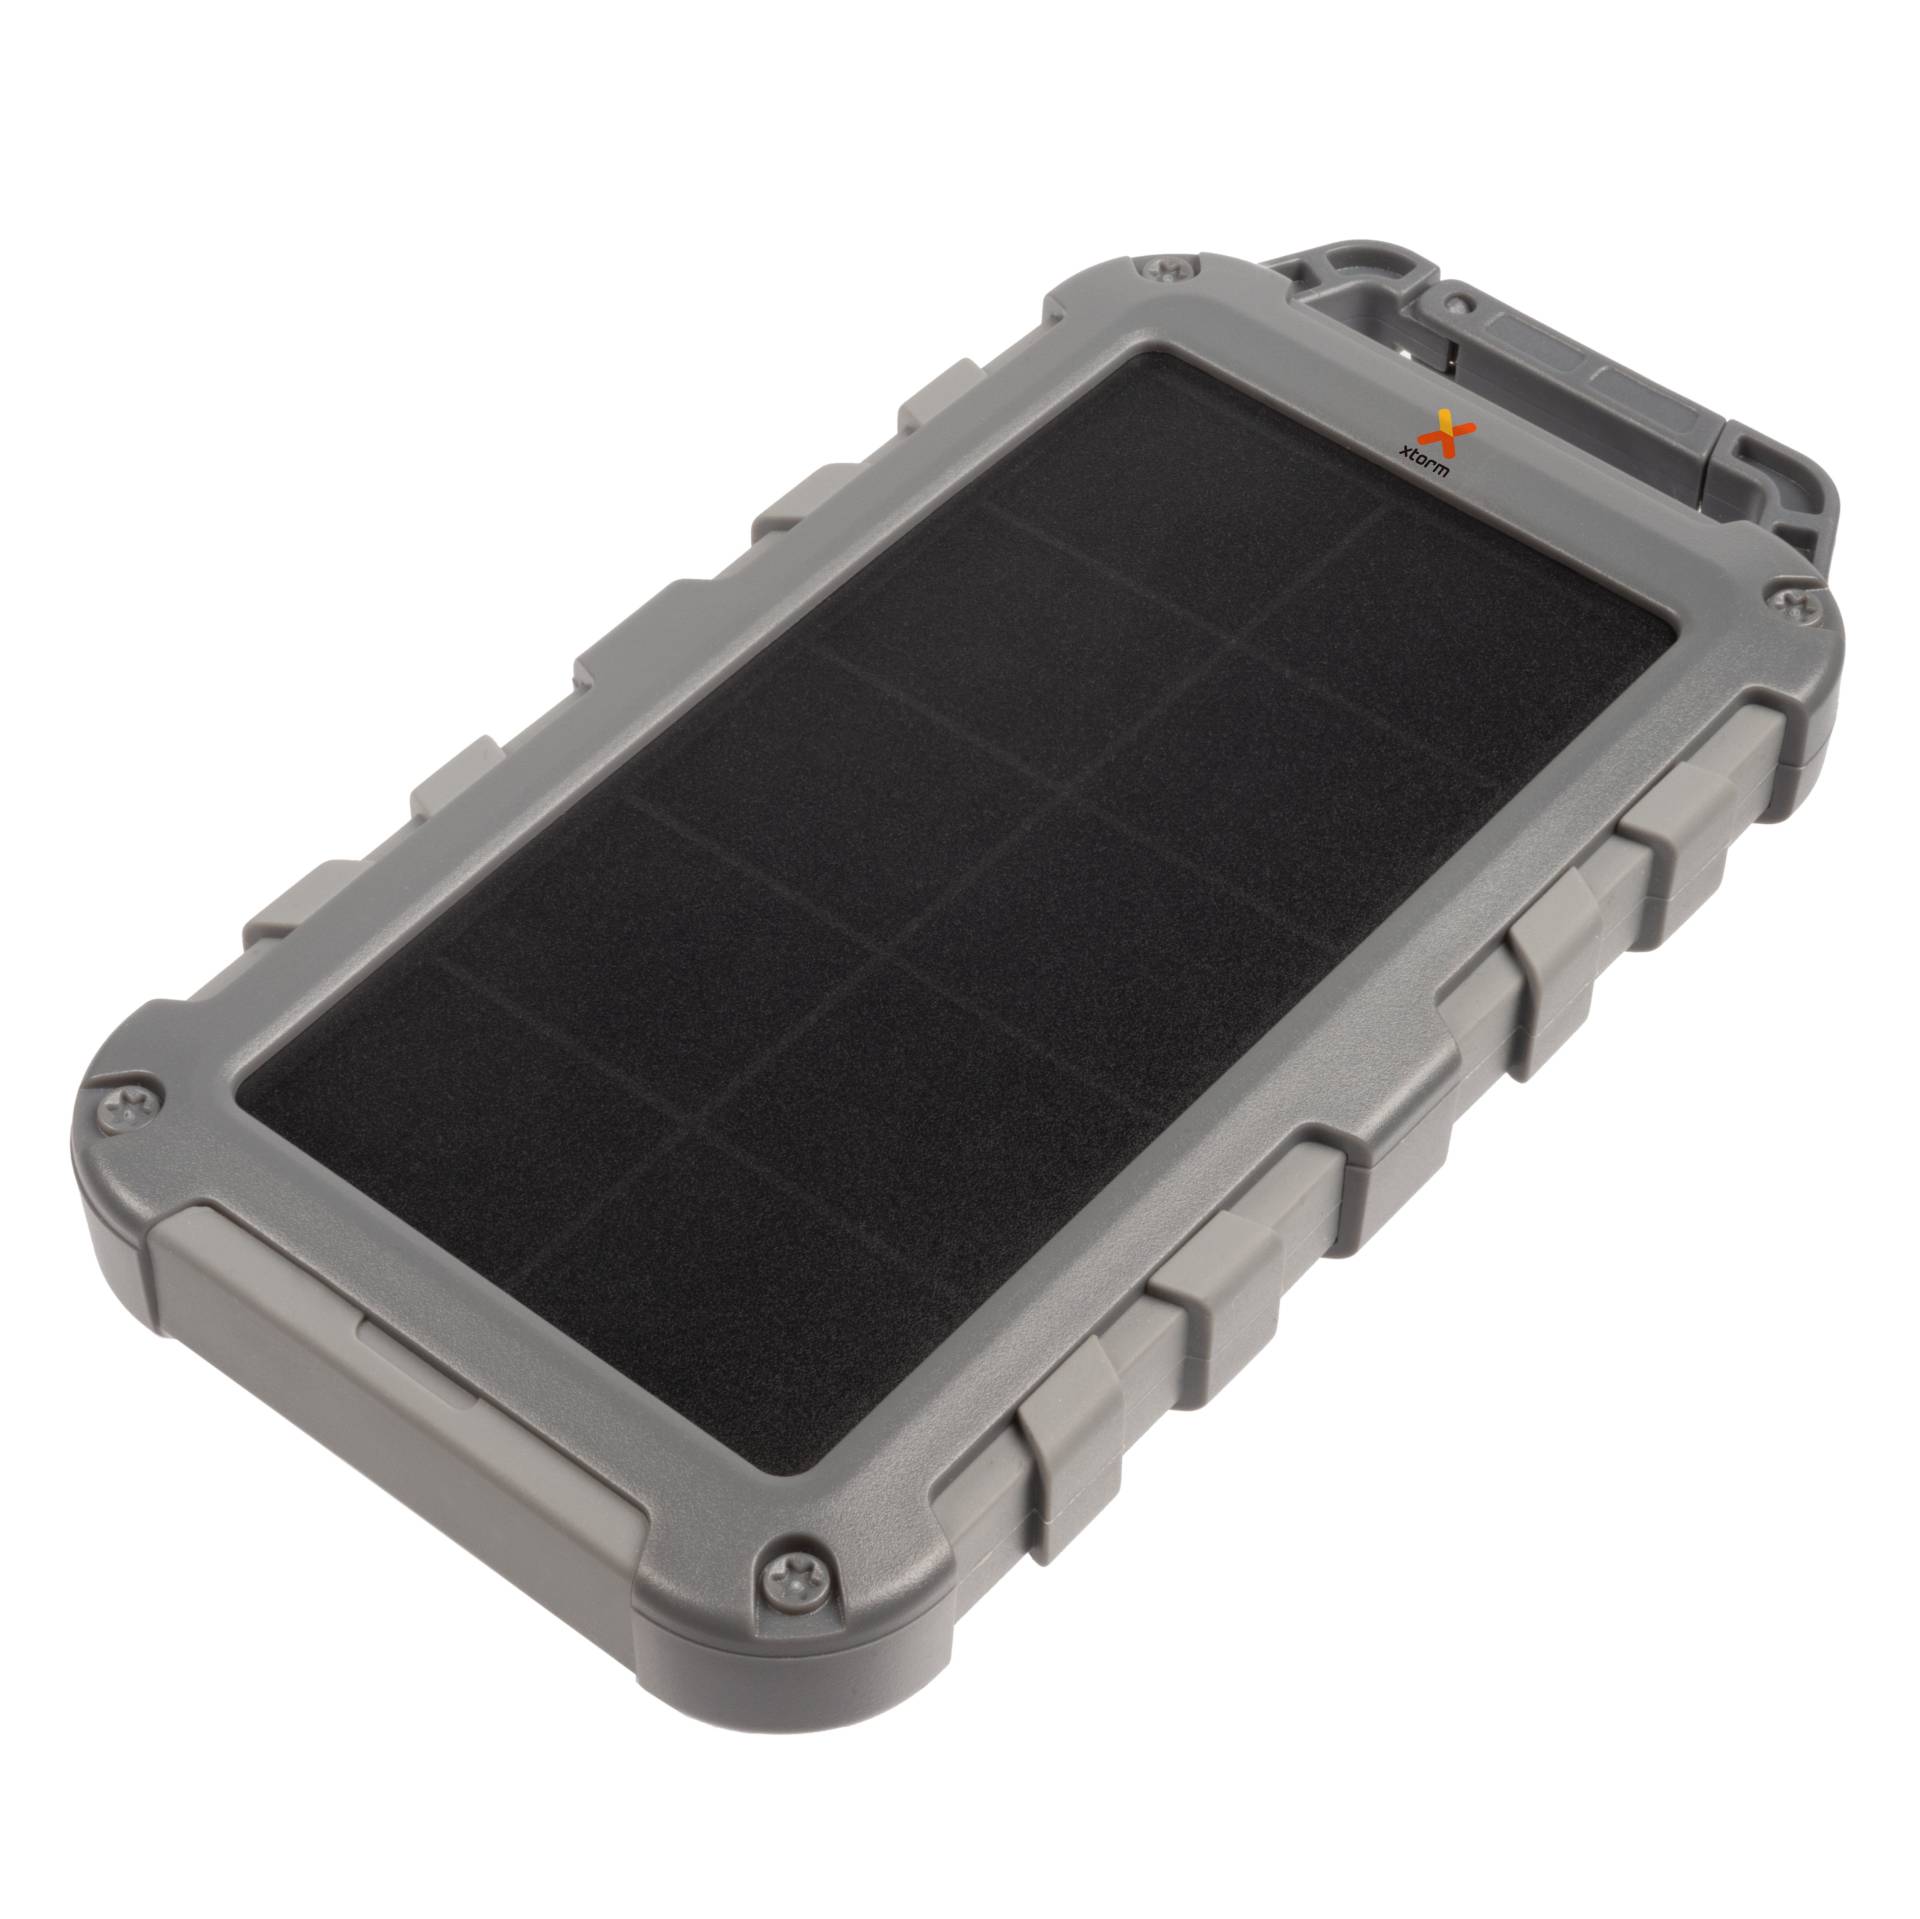 Xtorm - FS405 20W Fuel Series Solar ladegerät Power-bank 10.000 mAh von Xtorm